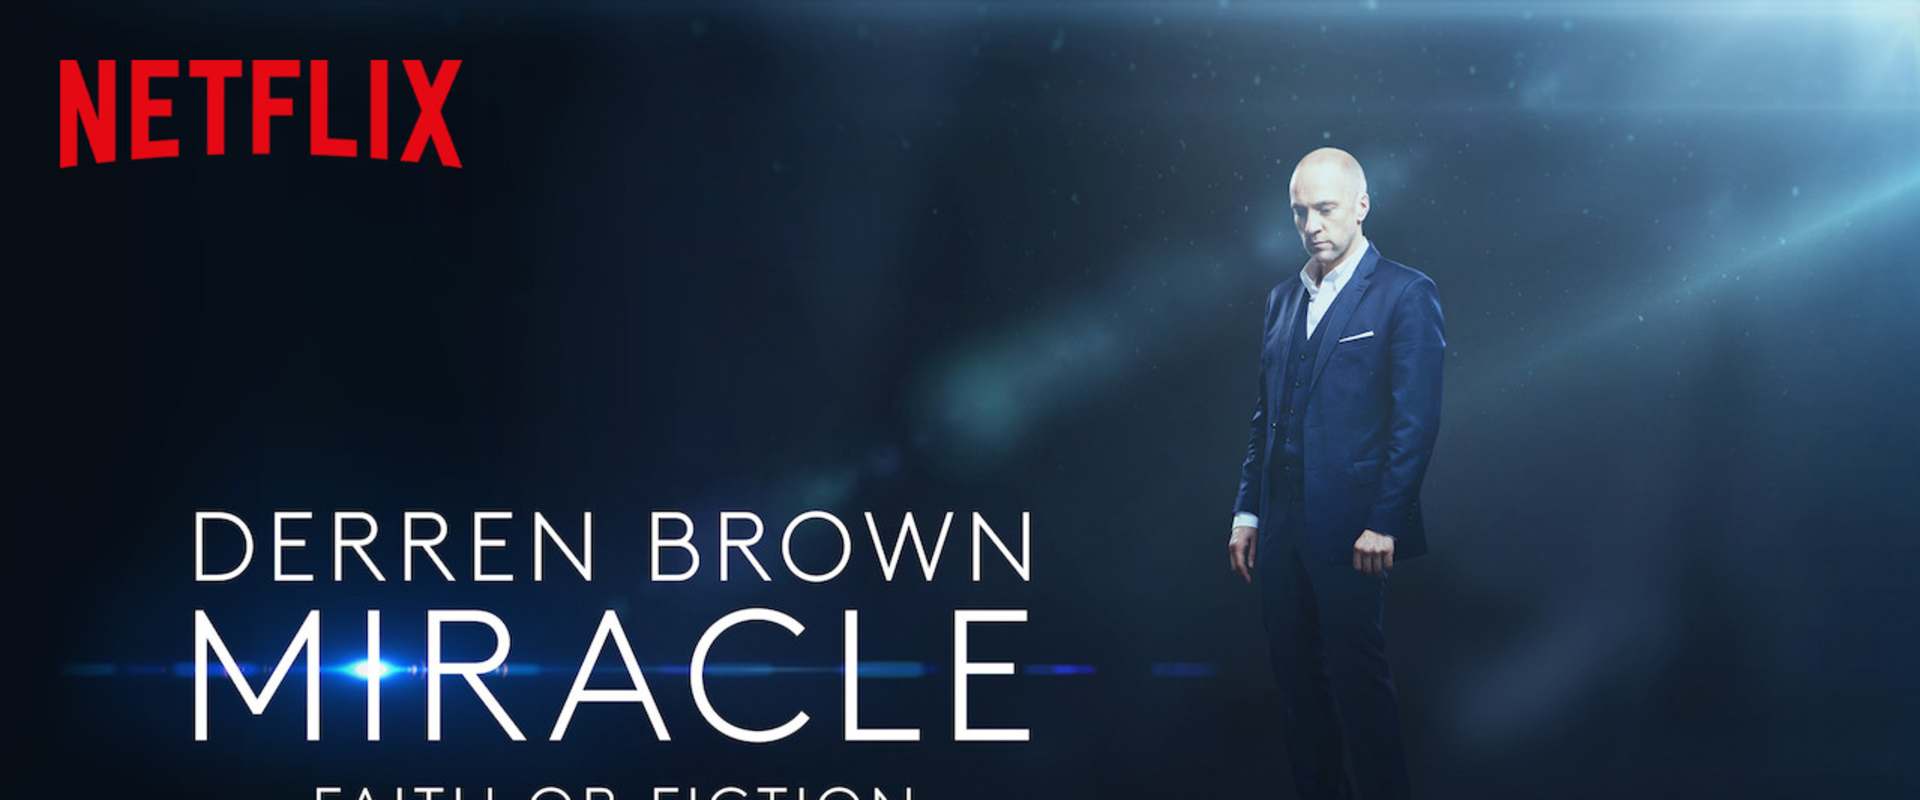 Derren Brown: Miracle background 1